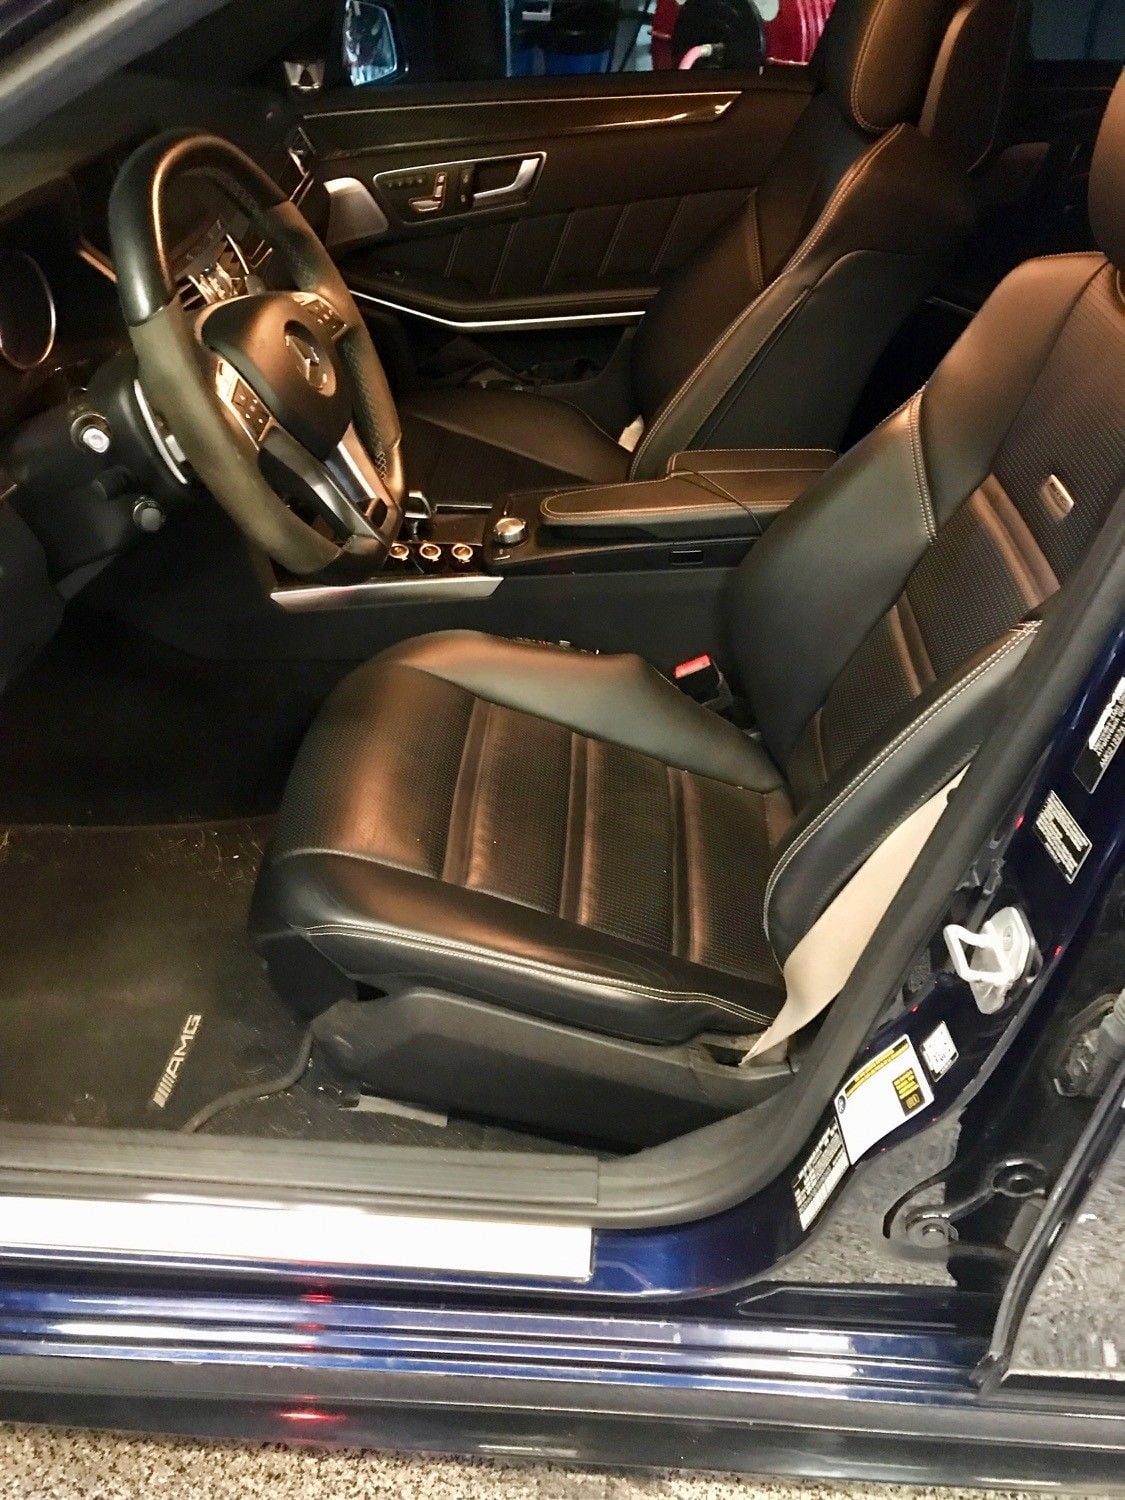 2014 Mercedes-Benz E63 AMG S - 2014 E63s Wagon Lunar Blue over Black with carbon fiber interior - Used - VIN WDDHH7GB7EA982600 - 49,800 Miles - 8 cyl - AWD - Automatic - Wagon - Blue - Gurnee, IL 6003, United States